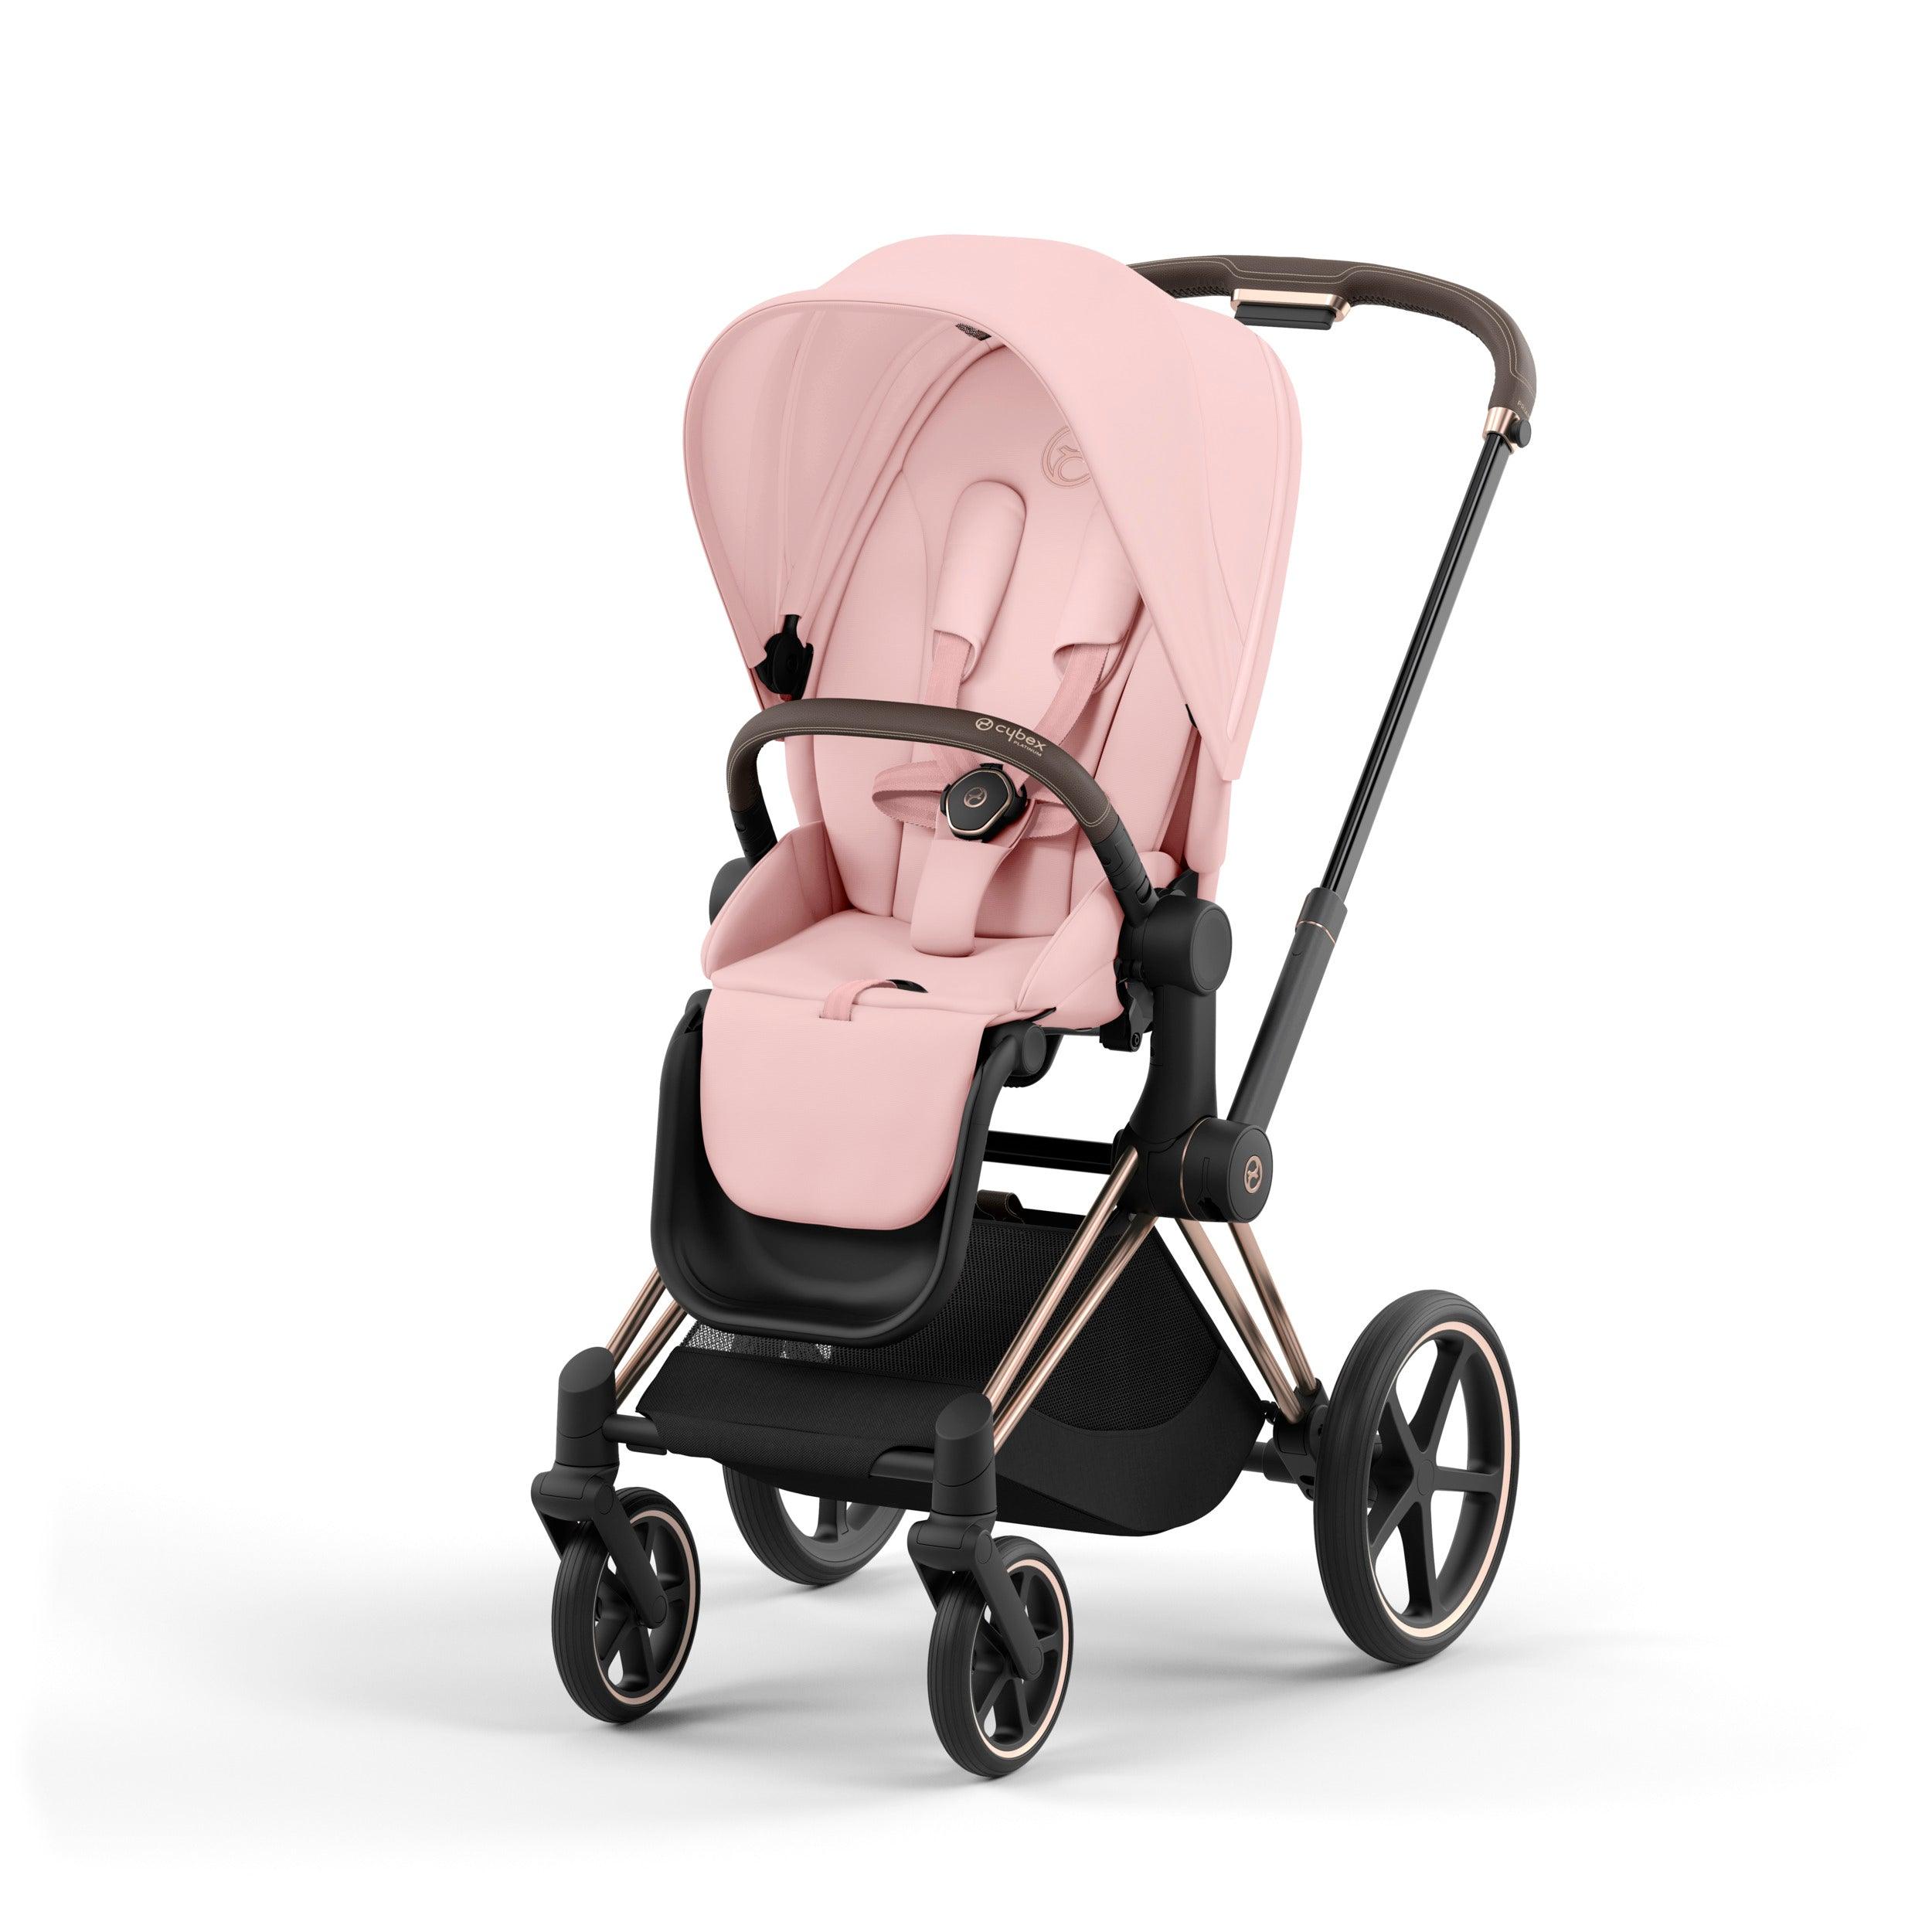 CYBEX Priam Baby Stroller in Peach Pink & Rosegold Frame